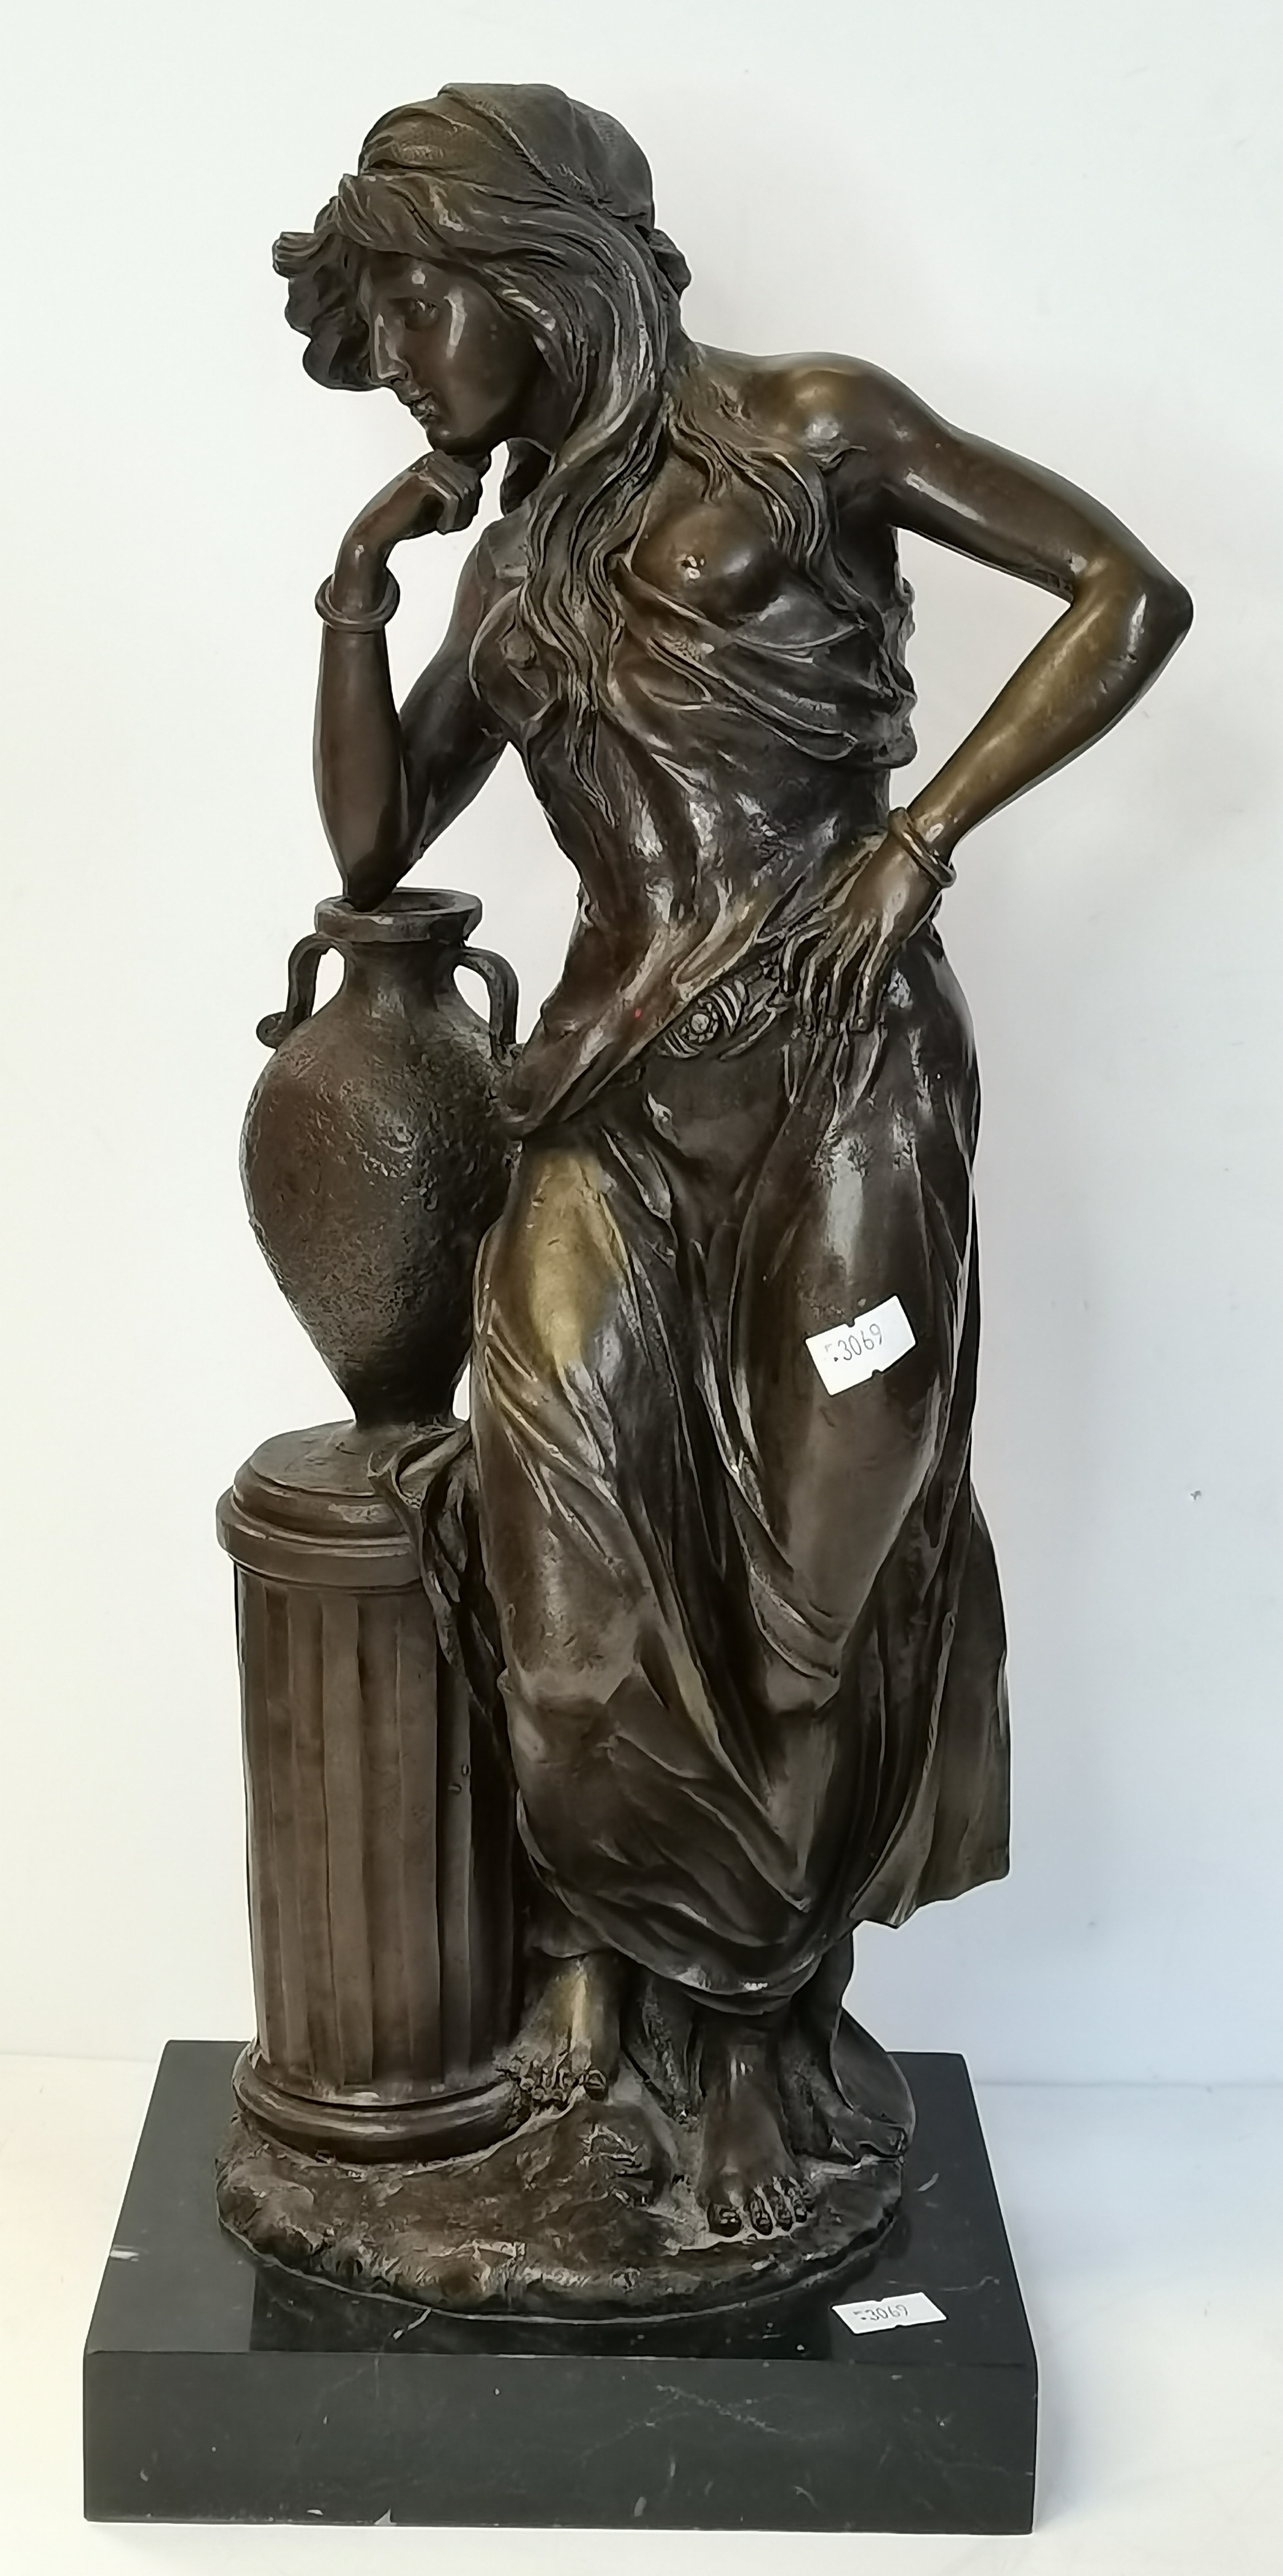 A bronze figure of a classical maiden